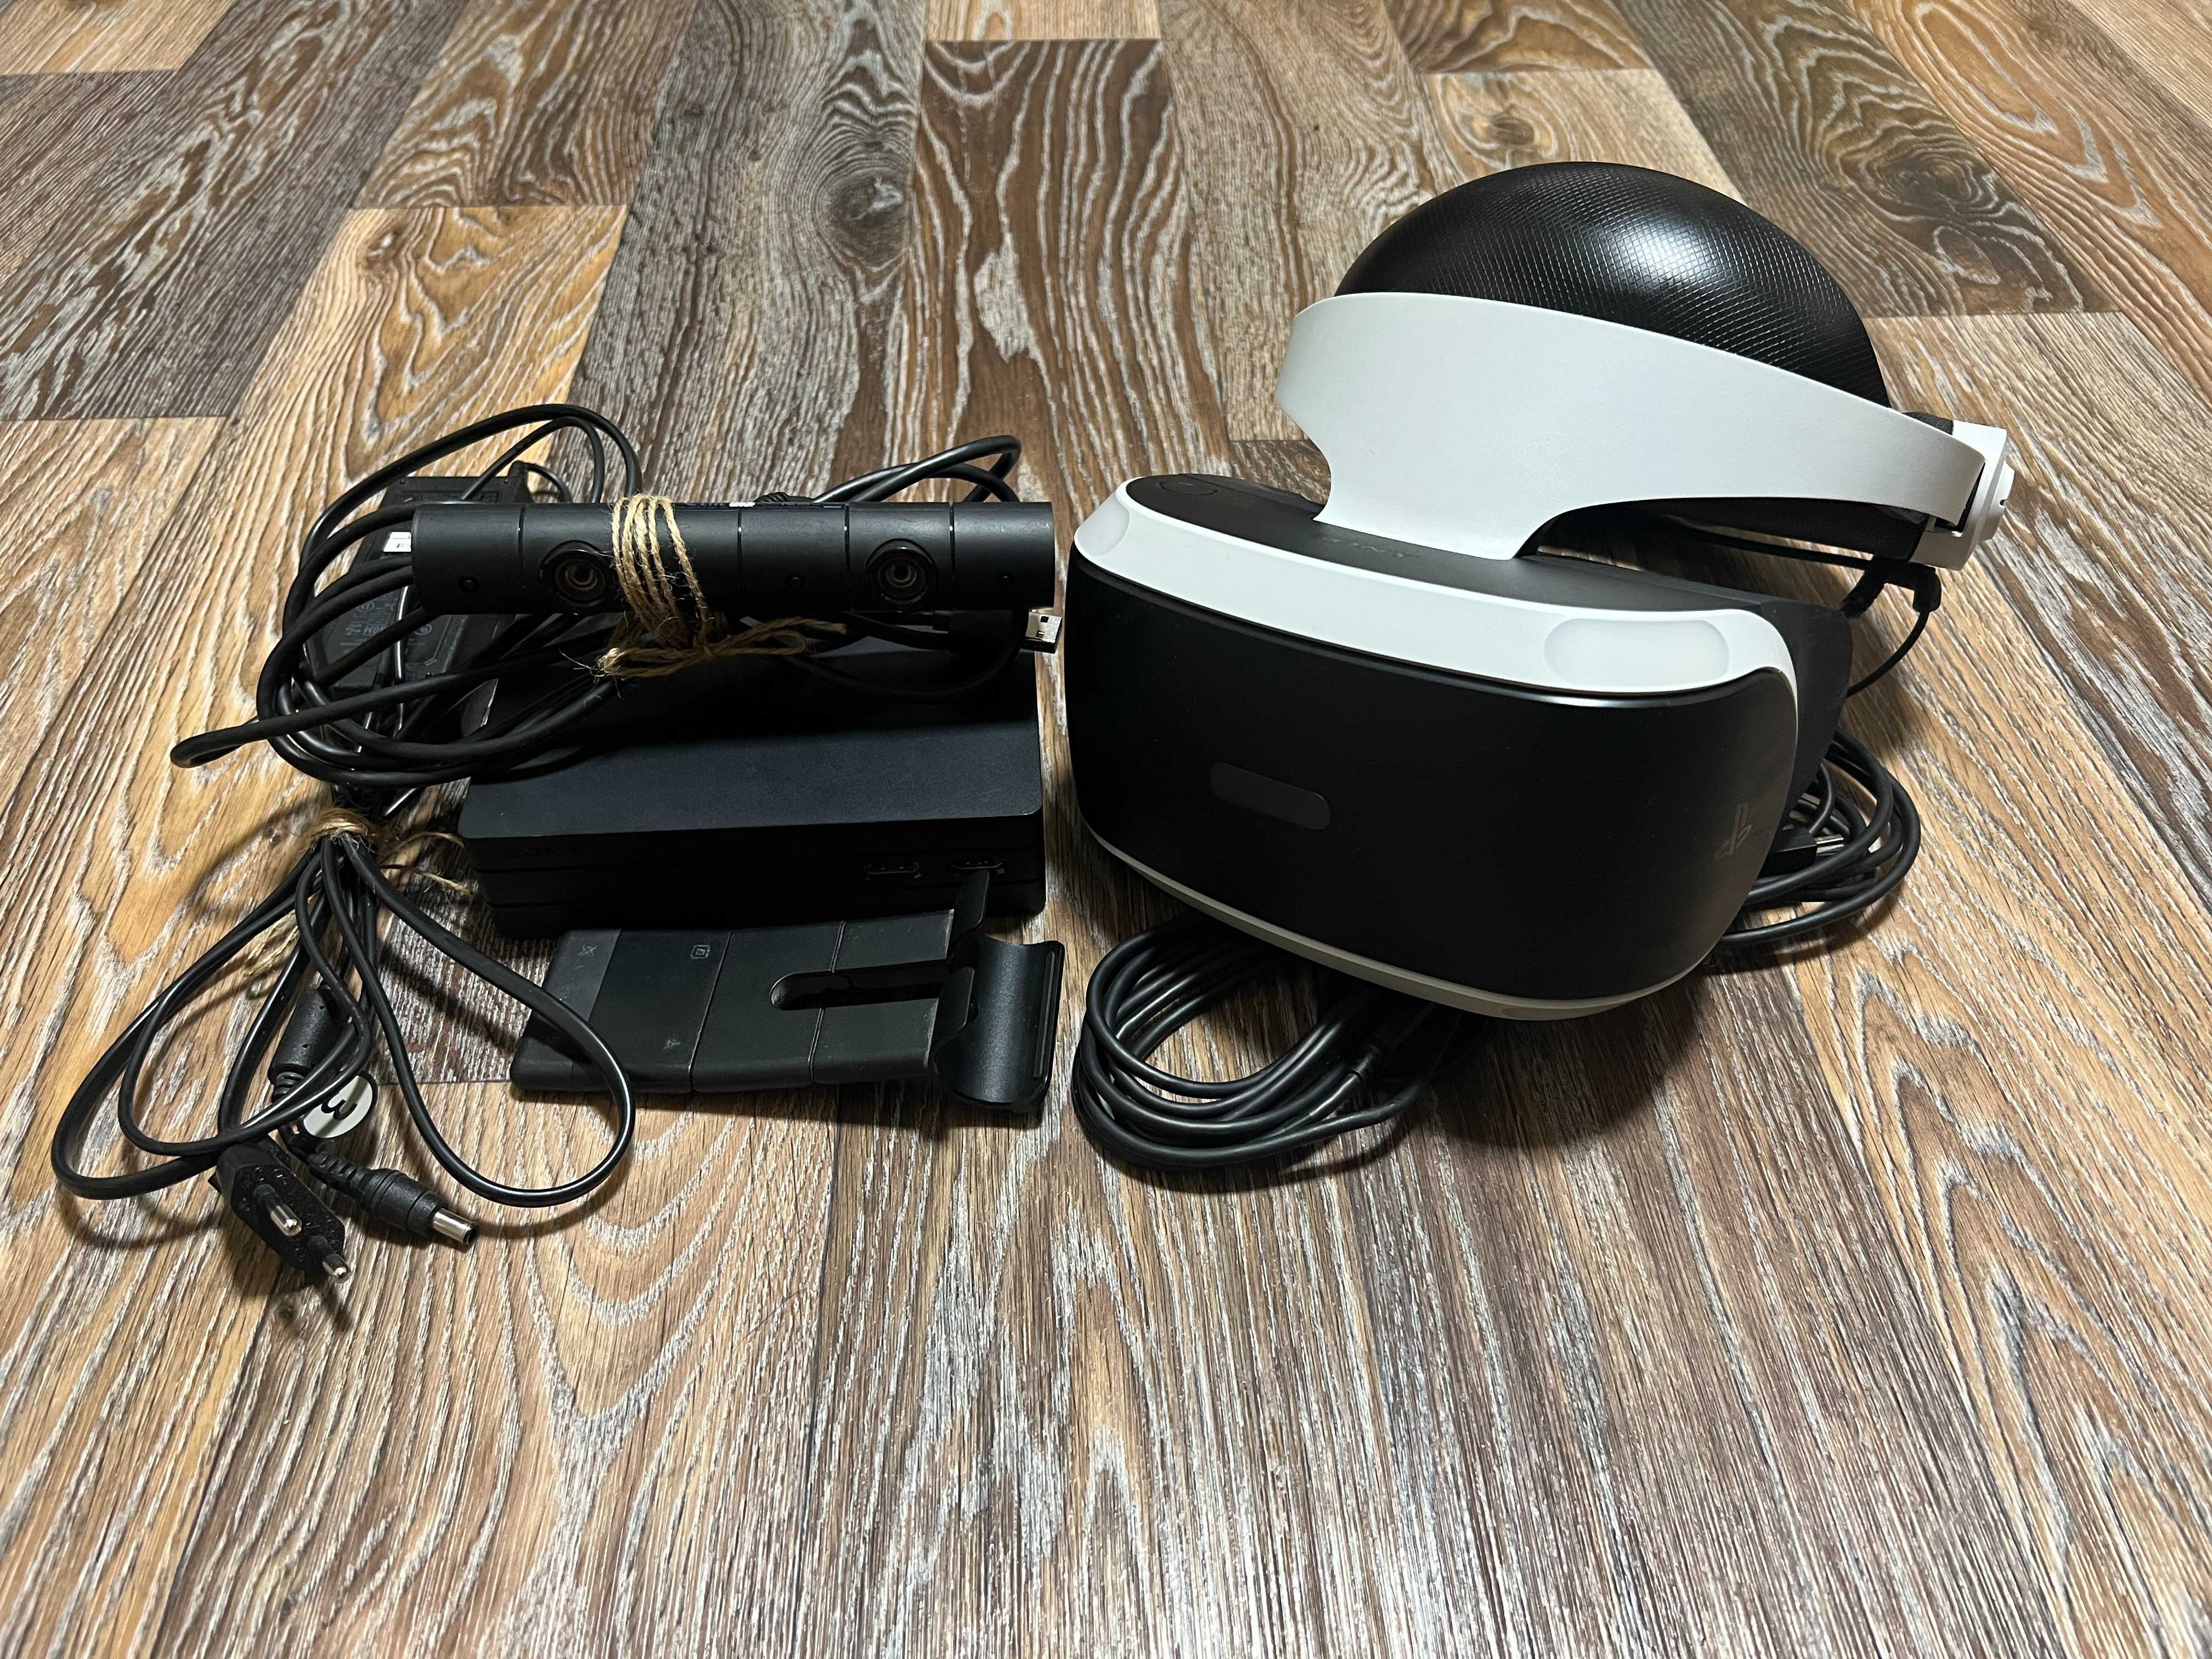 Sony playstation PS VR 2 ревизия ps4 vr (гарантия)